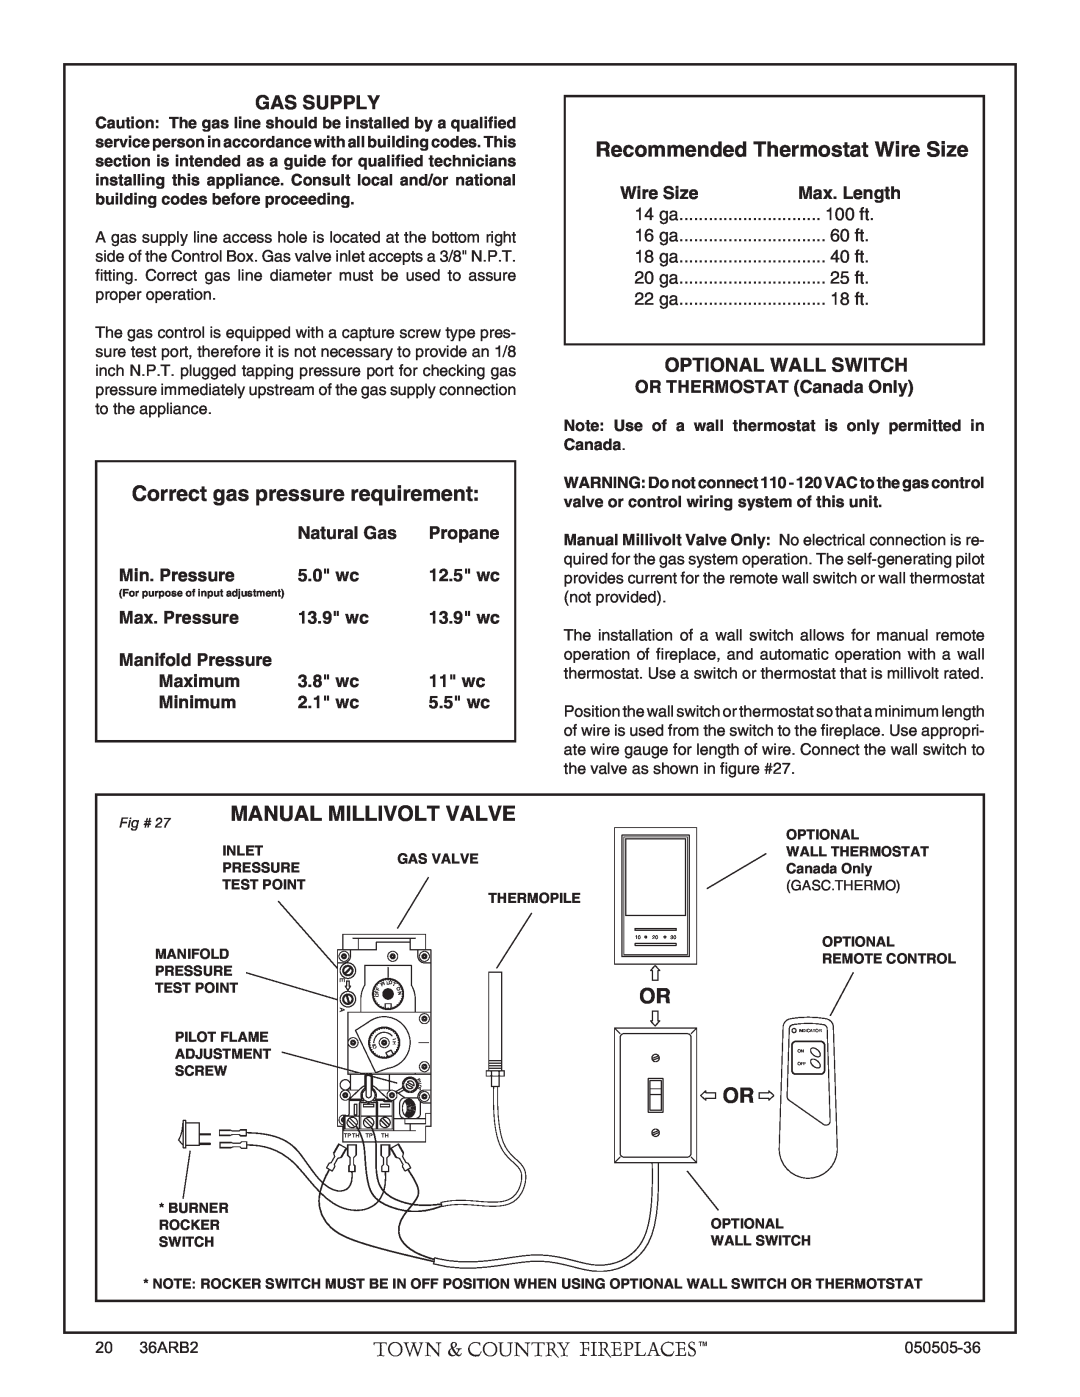 PGS TC36 AR manual Natural Gas, Propane, Min. Pressure, 5.0 wc, 12.5 wc, Max. Pressure, 13.9 wc, Manifold Pressure, Maximum 